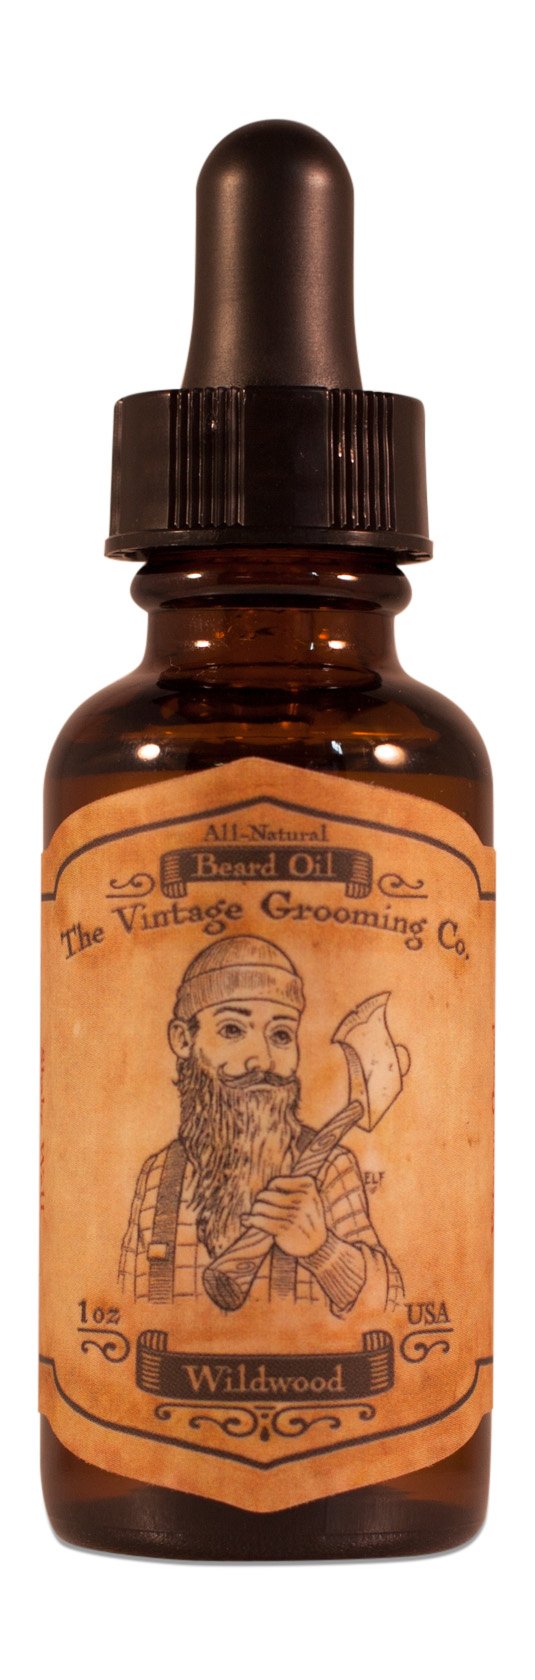 Wildwood Beard Oil - All Natural (1oz)